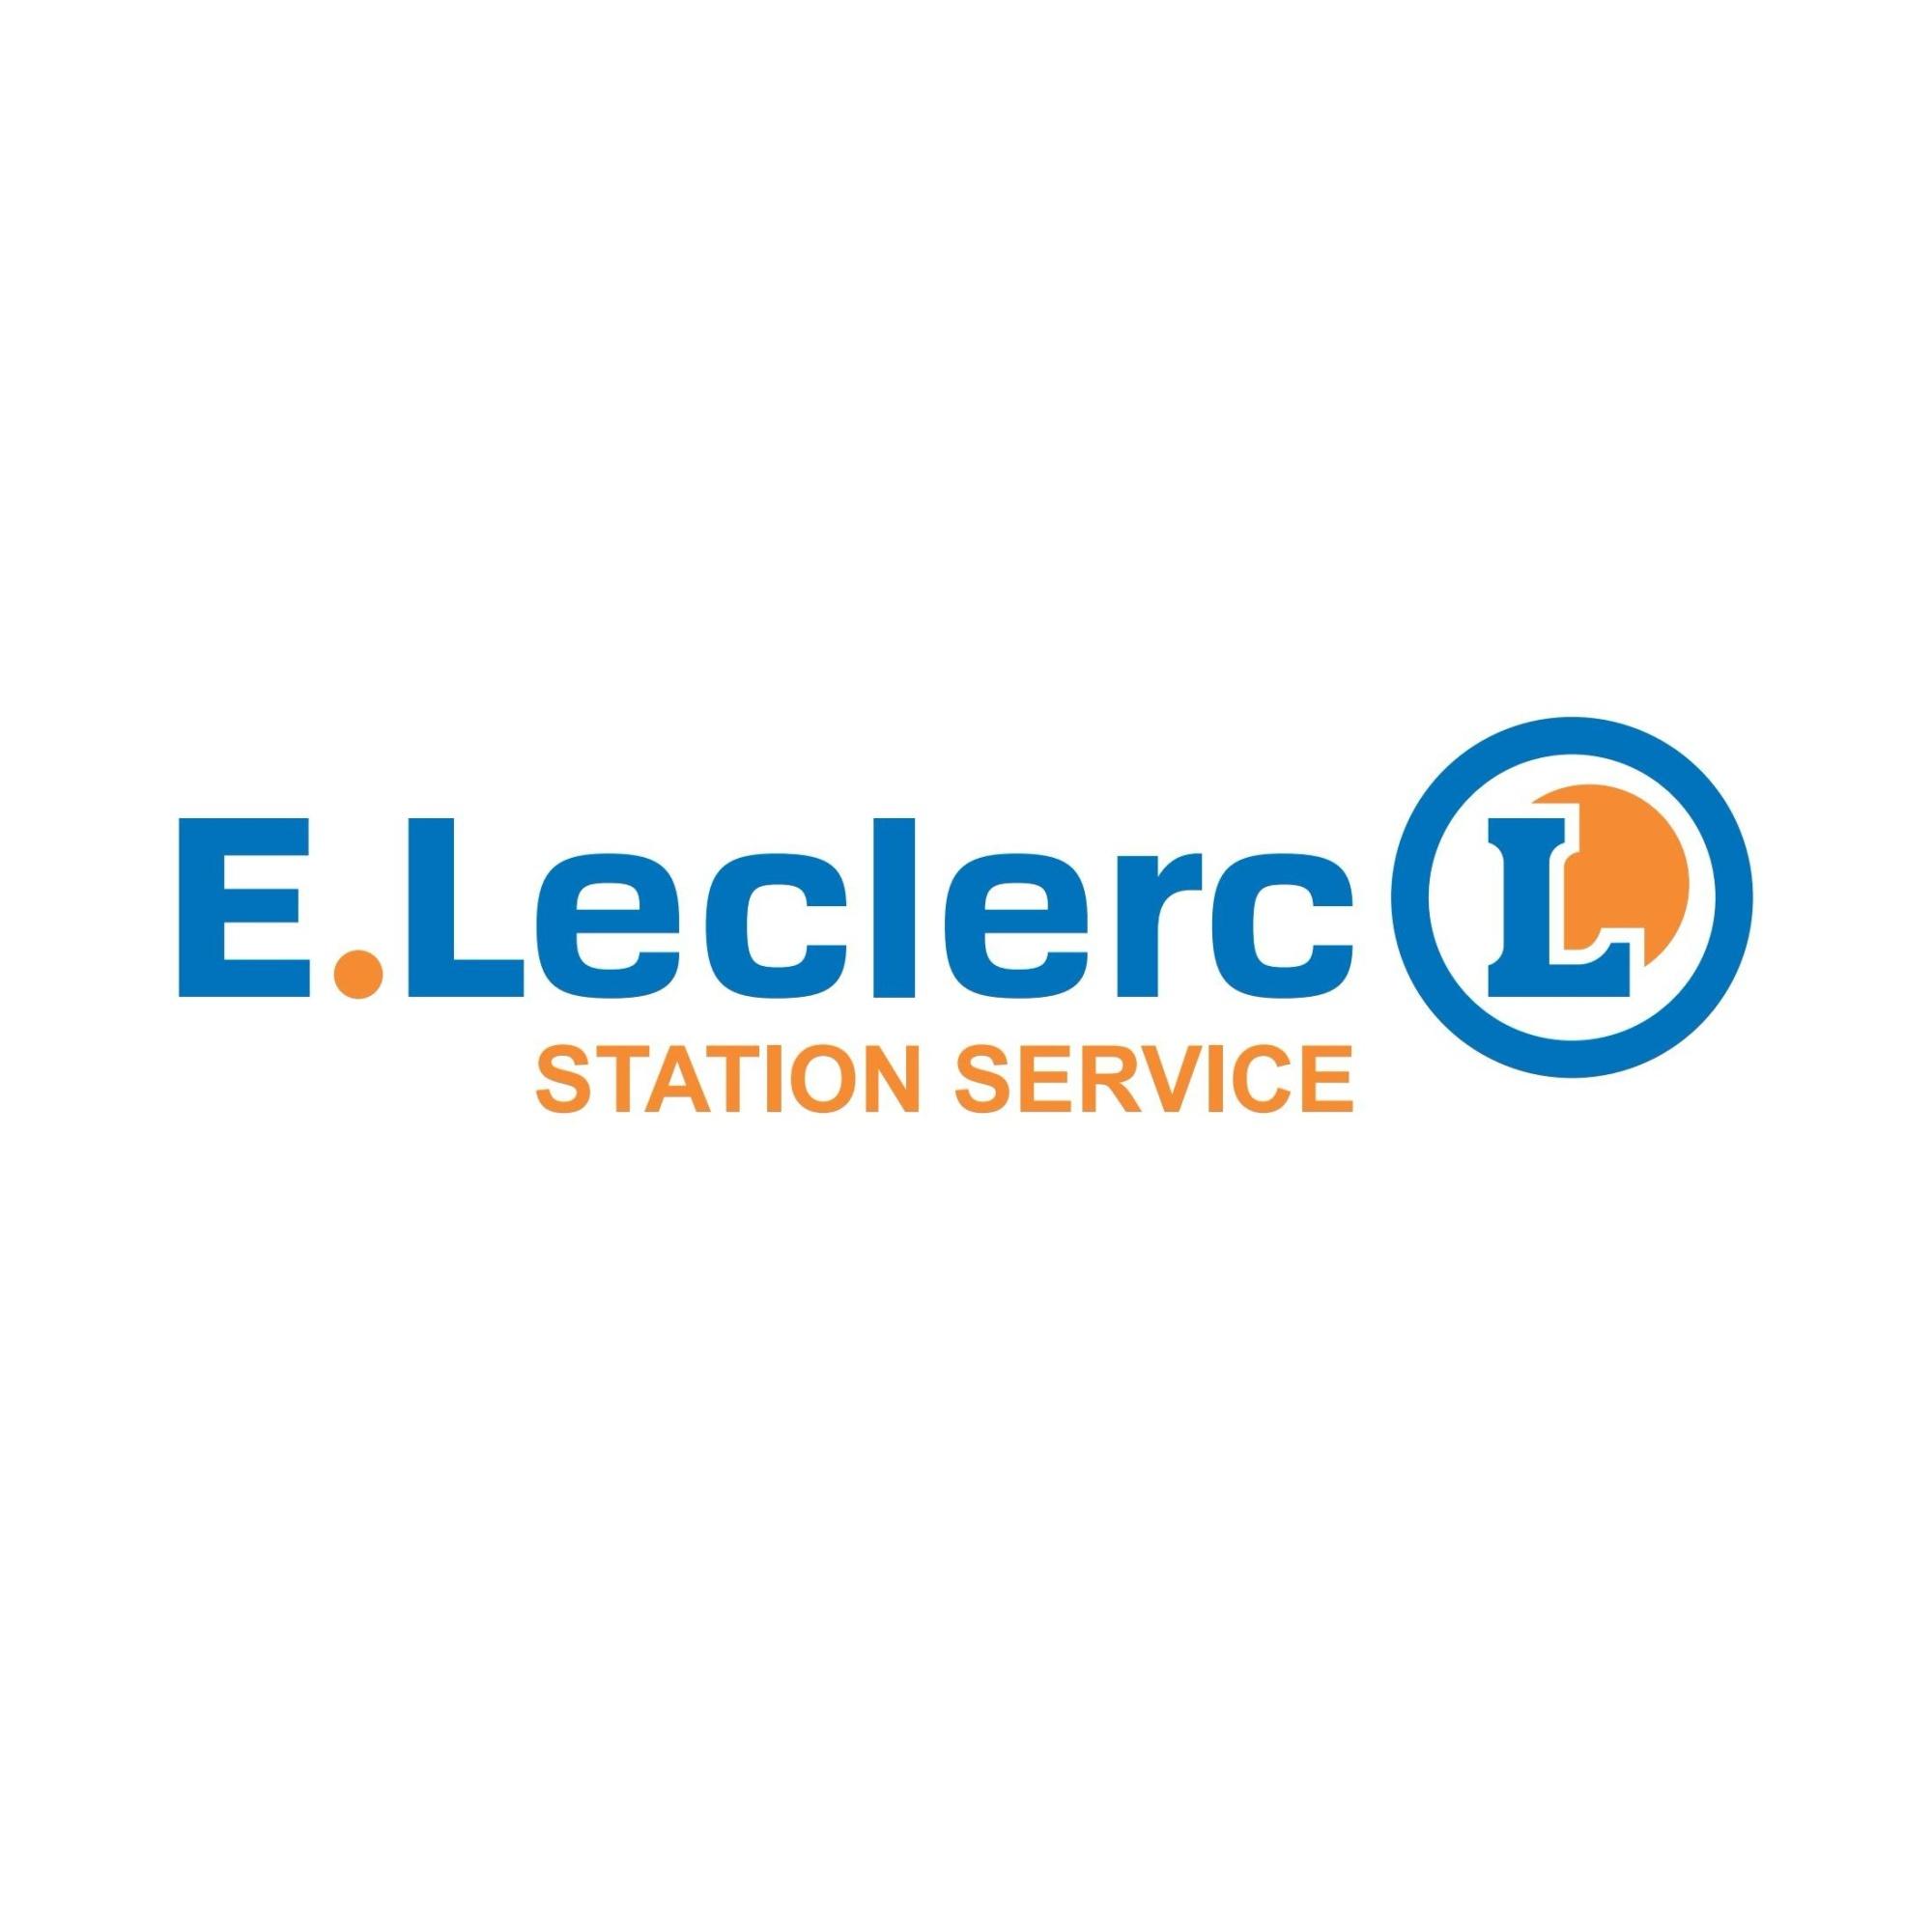 E.leclerc Station Service Bourgoin Jallieu